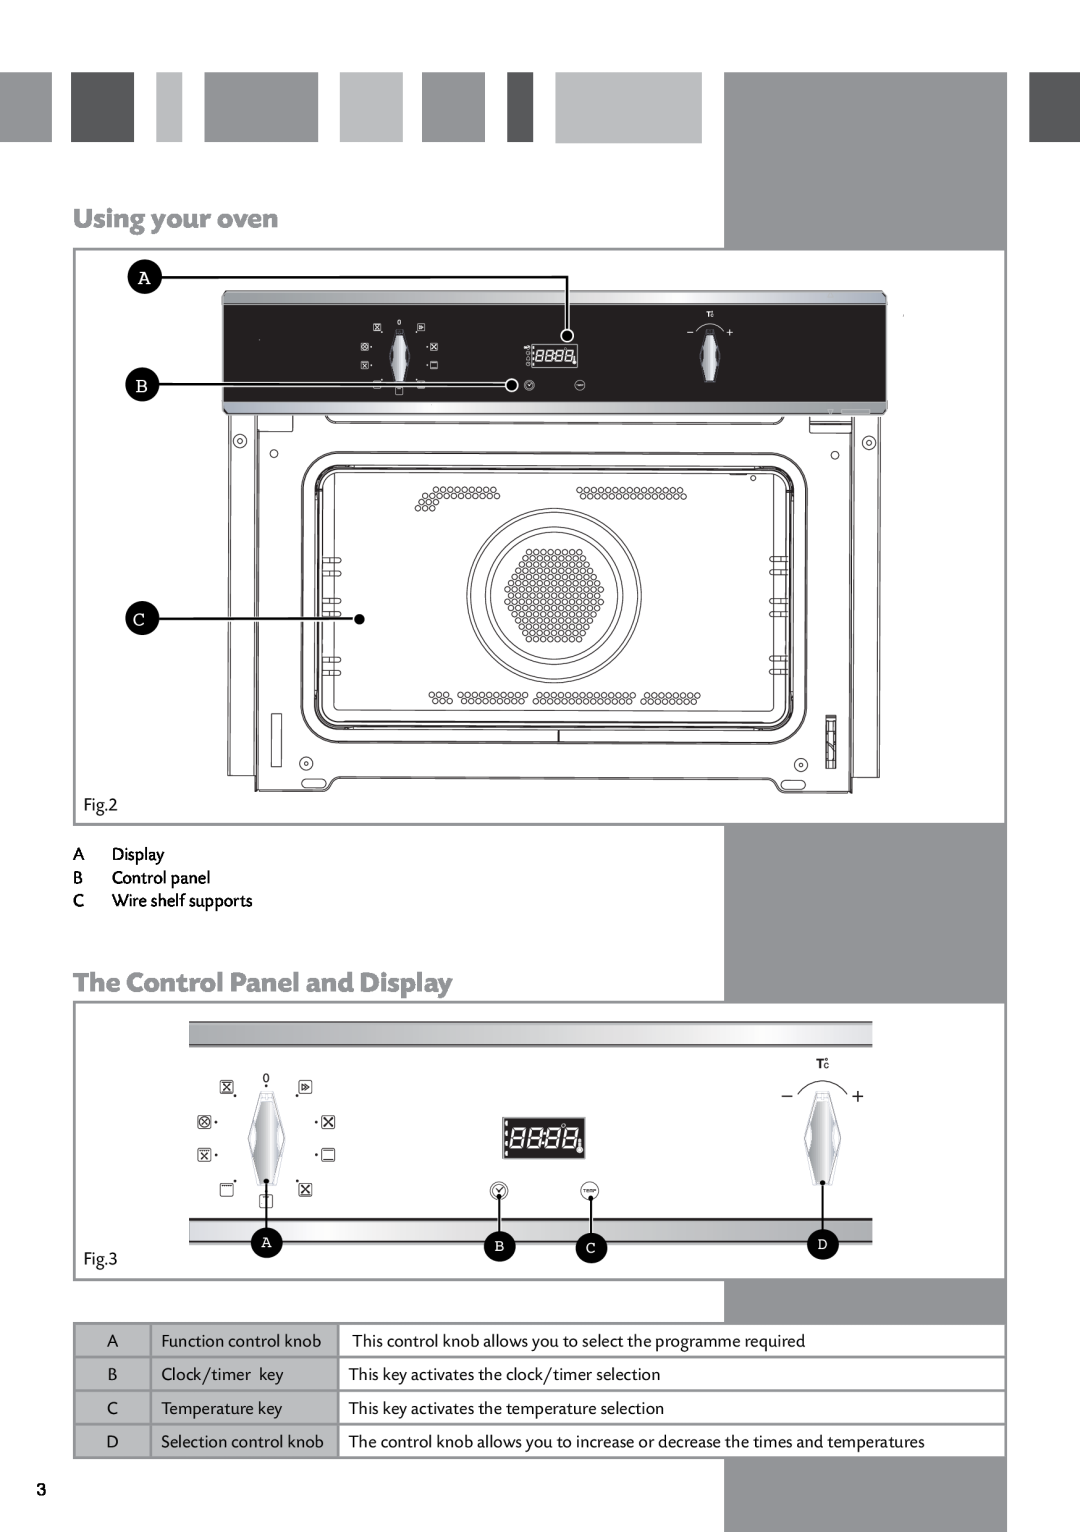 CDA SV430 manual Using your oven, The Control Panel and Display, Ab Cd 